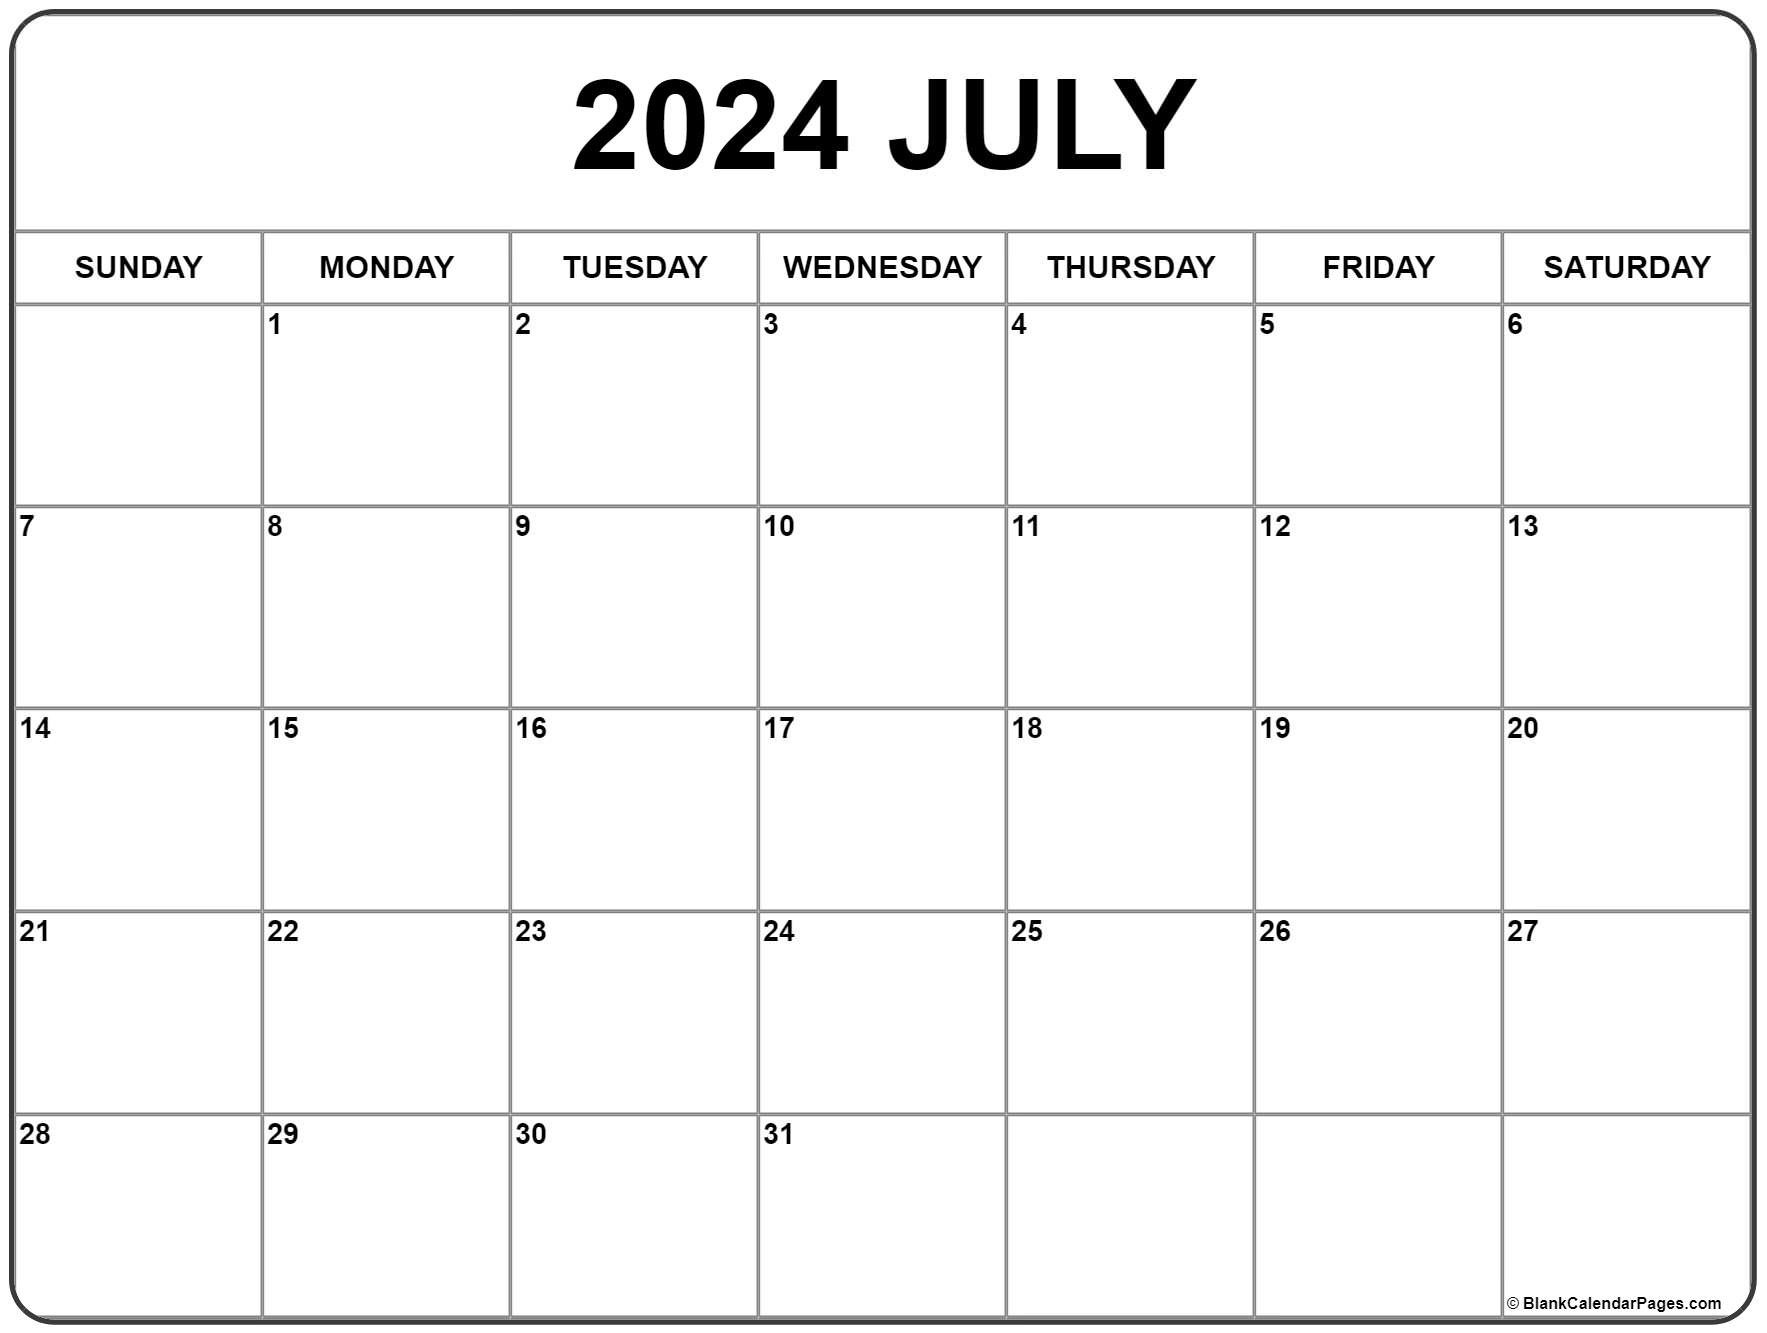 July 2024 Calendar | Free Printable Calendar intended for July Calendar Template 2024